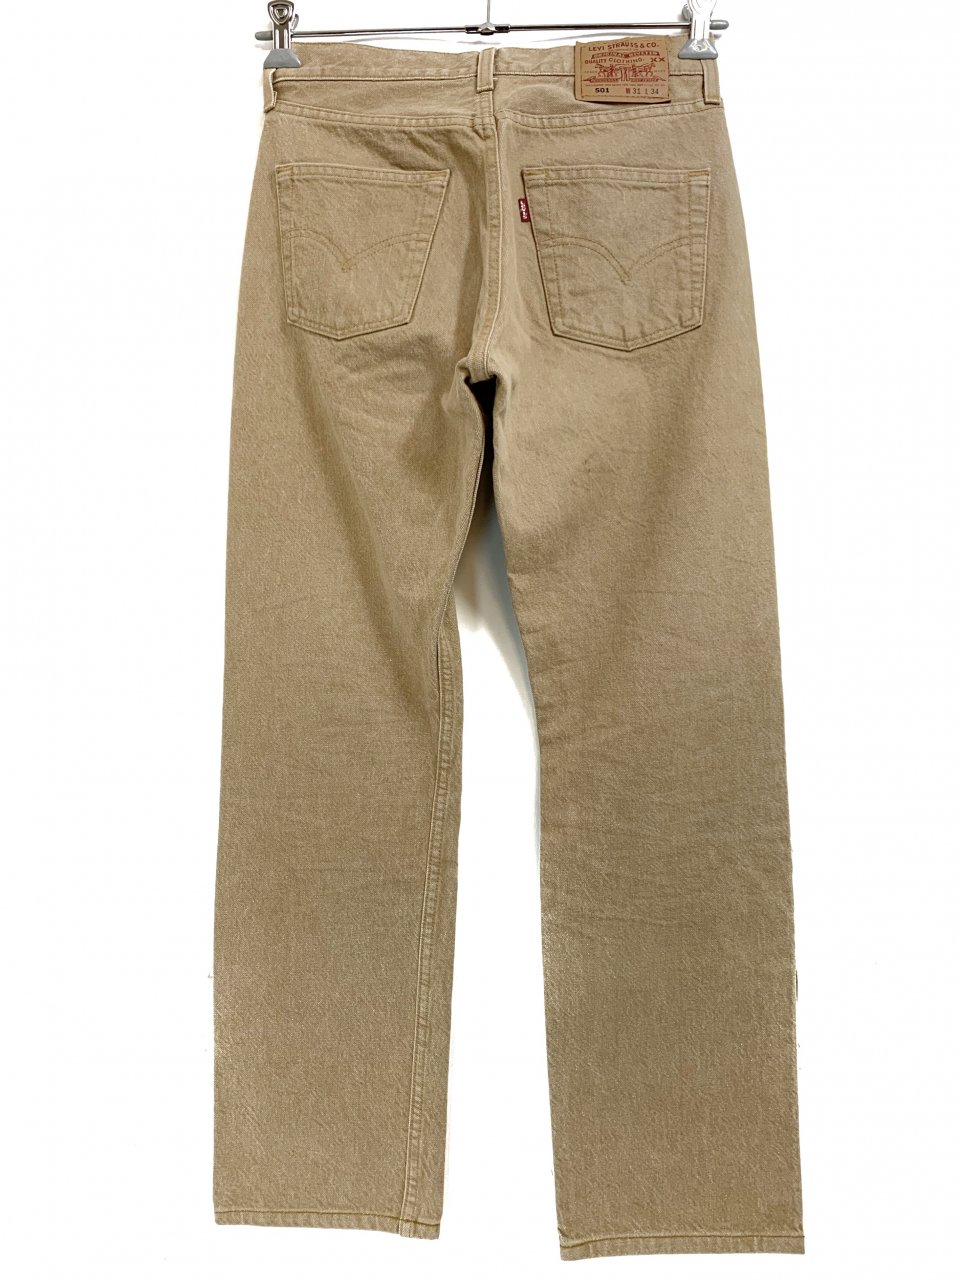 USA製 90s Levi's 501 Over Dyed Denim Pants ベージュ W31×L30 リーバイス Levis デニムパンツ  ストレート 後染め アメリカ製 カーキ - NEWJOKE ONLINE STORE